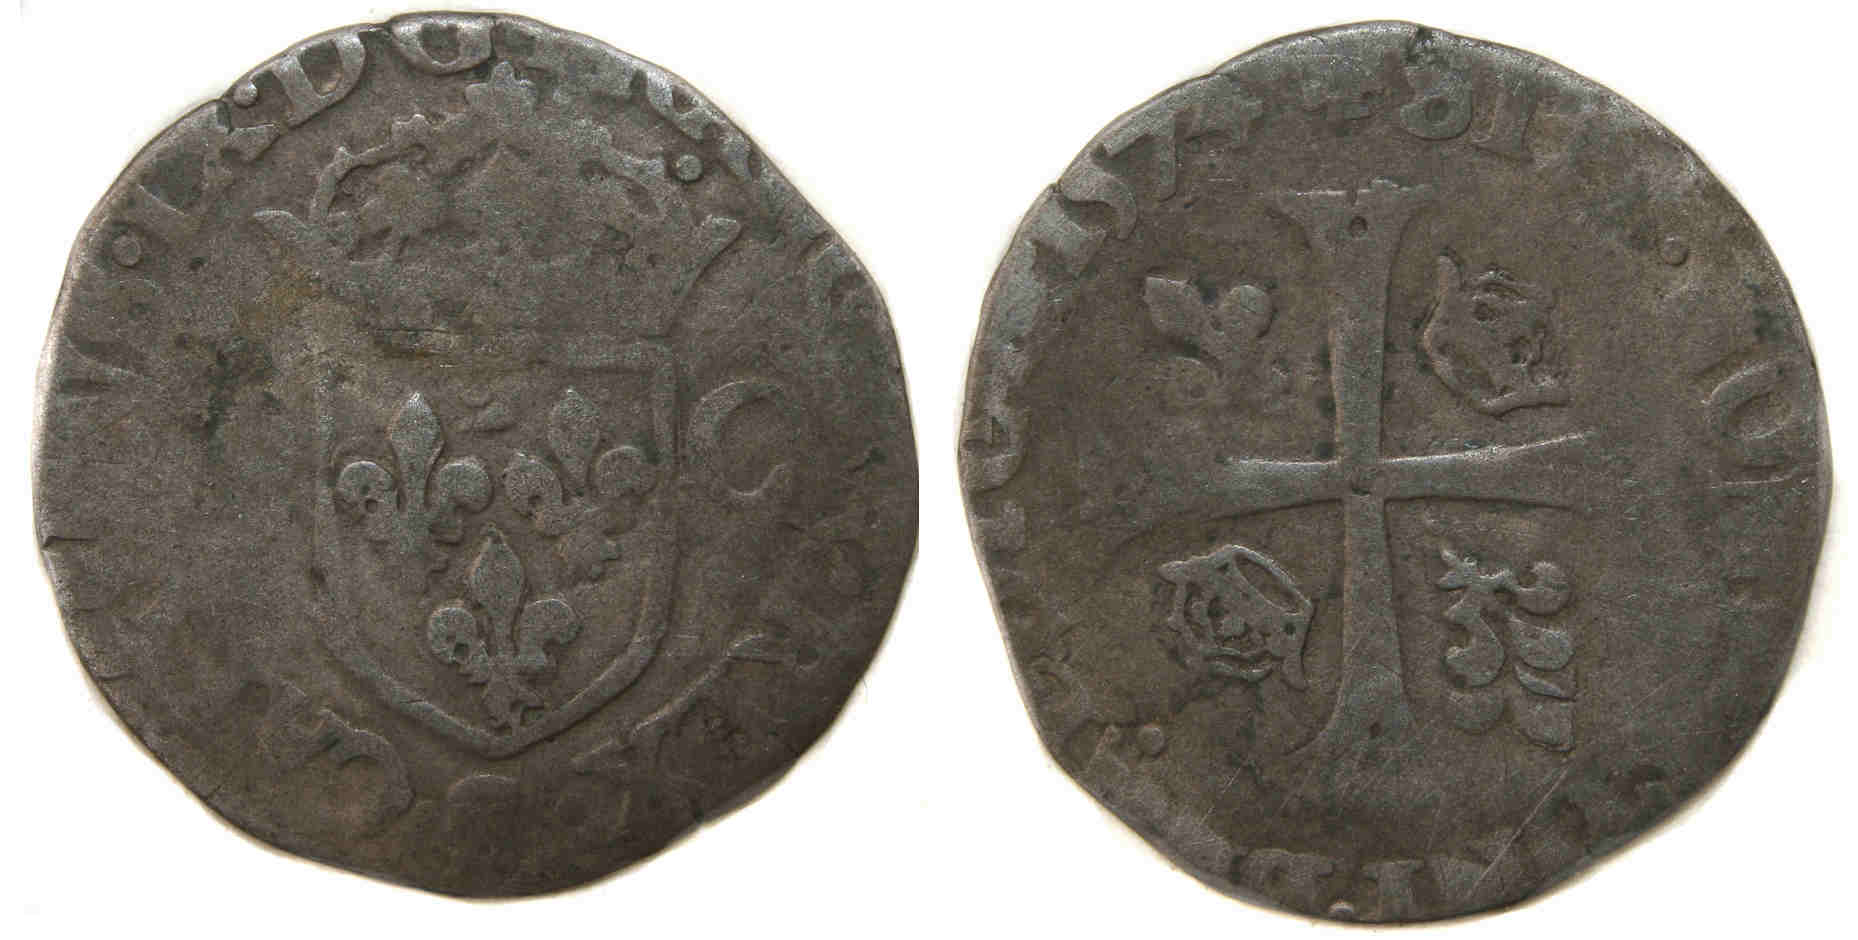 Monnaies royales francaises CHARLES IX DOUZAIN 2C 1574 troyes